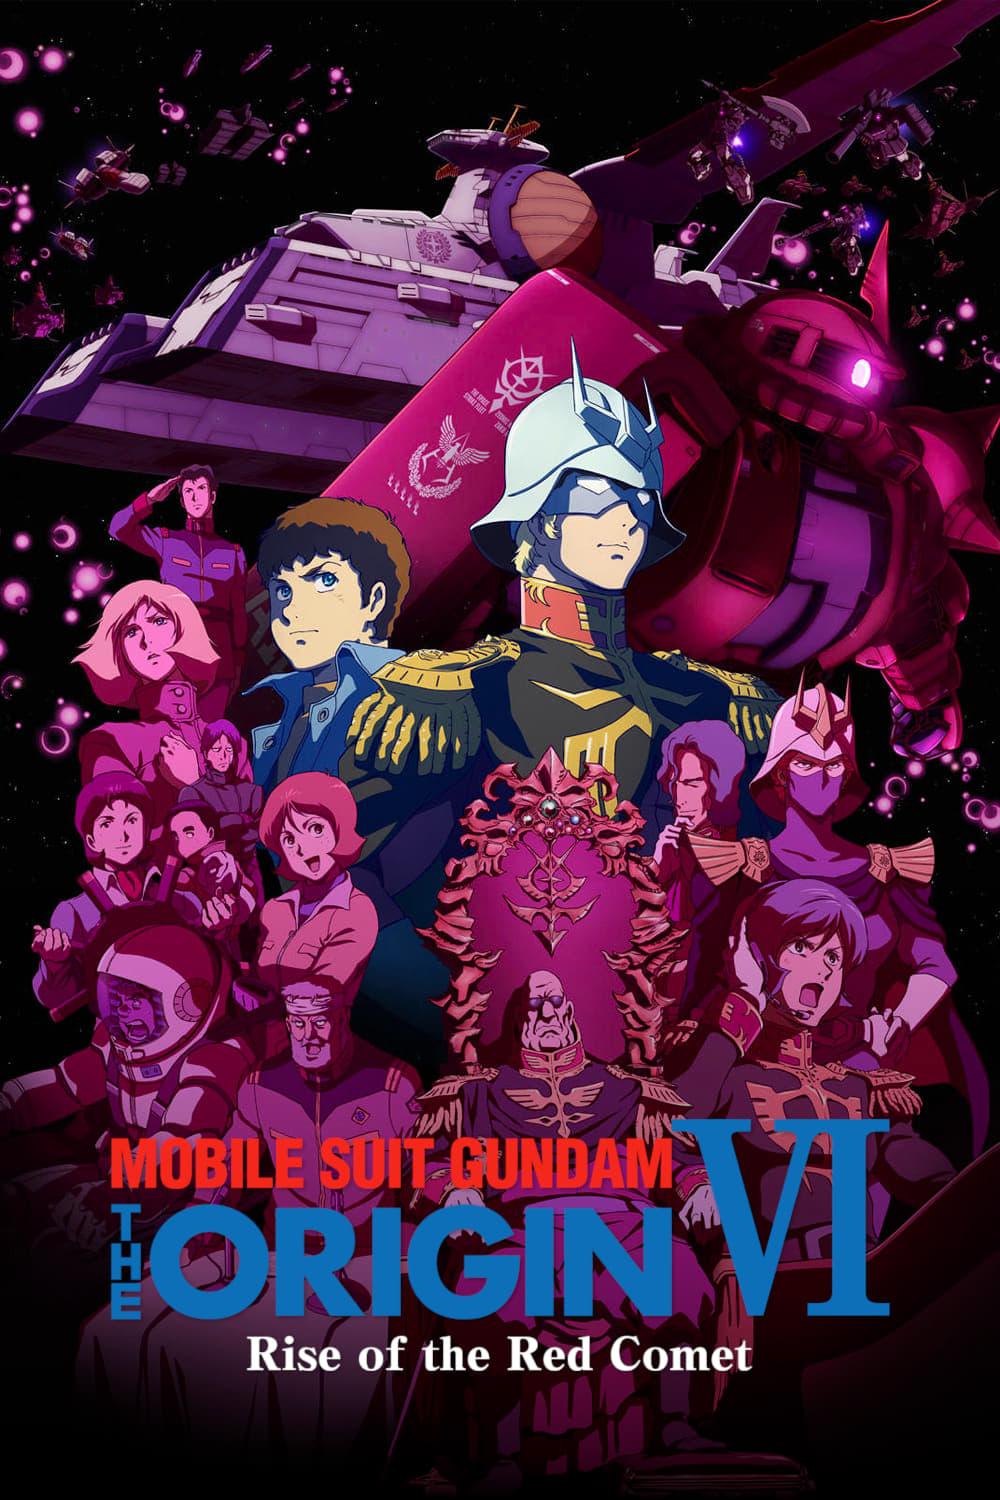 Mobile Suit Gundam: The Origin VI – Rise of the Red Comet poster